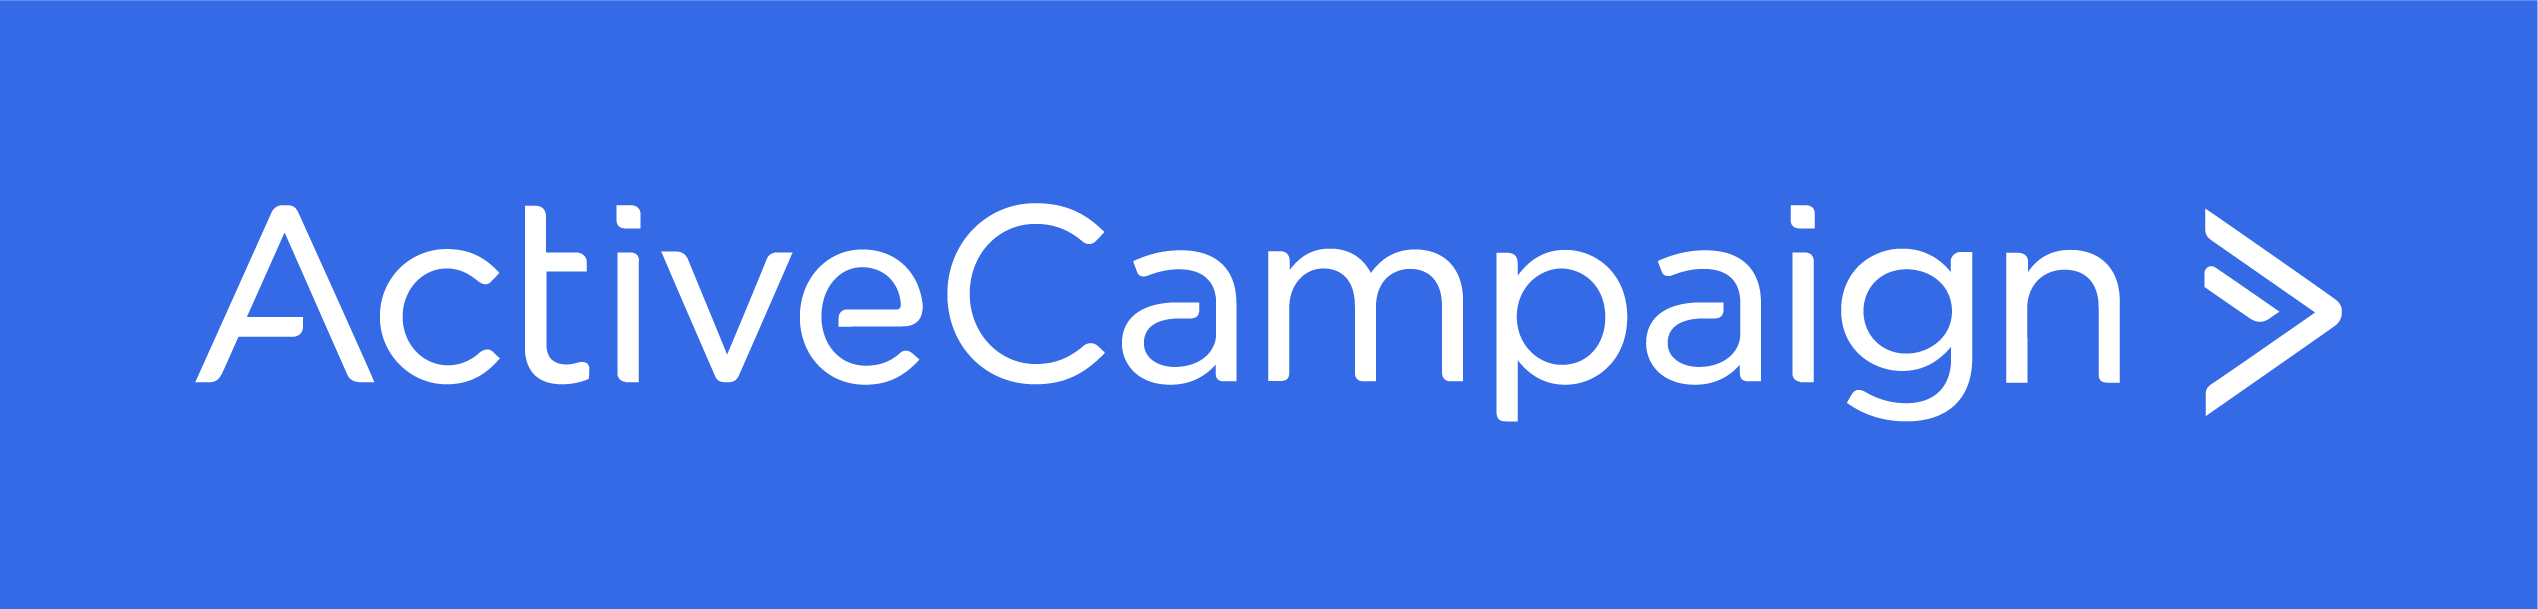 Active Campaign logo white bluebg